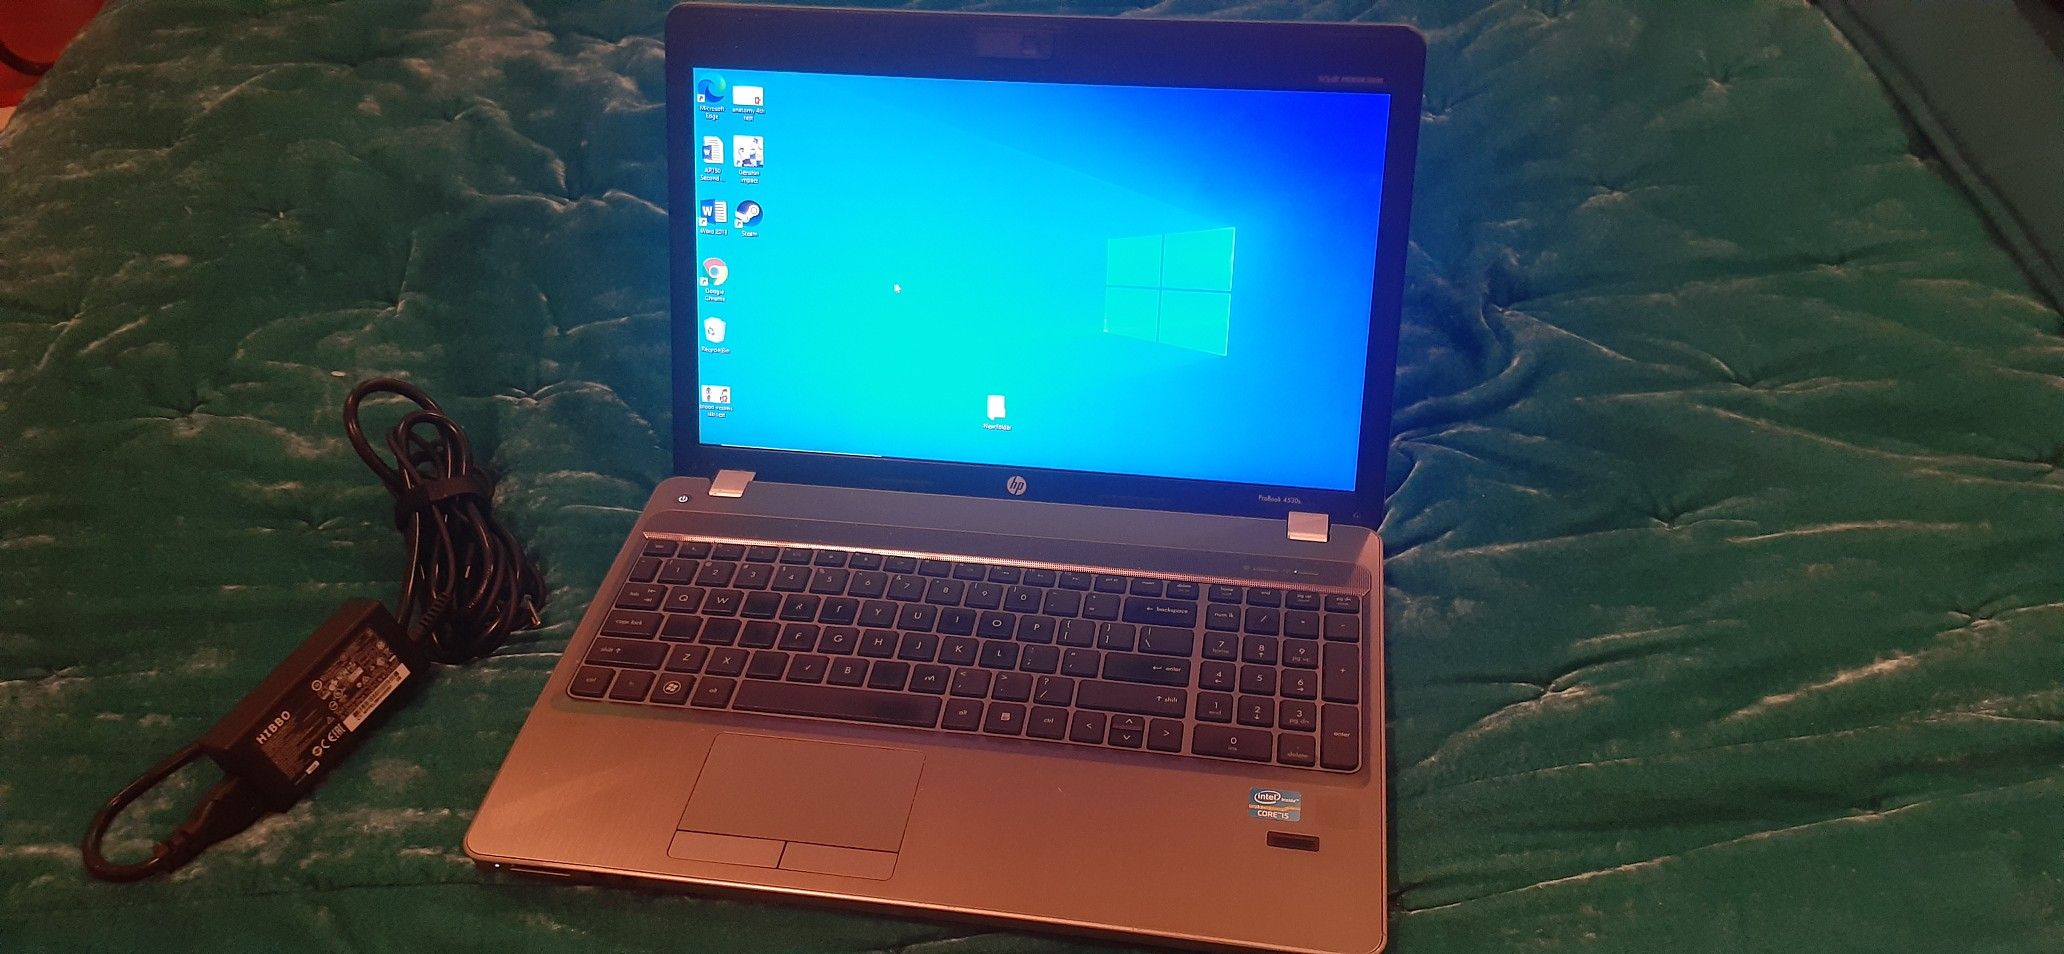 HP Probook 4530s 15 inch Intel i5 8gb ram Laptop